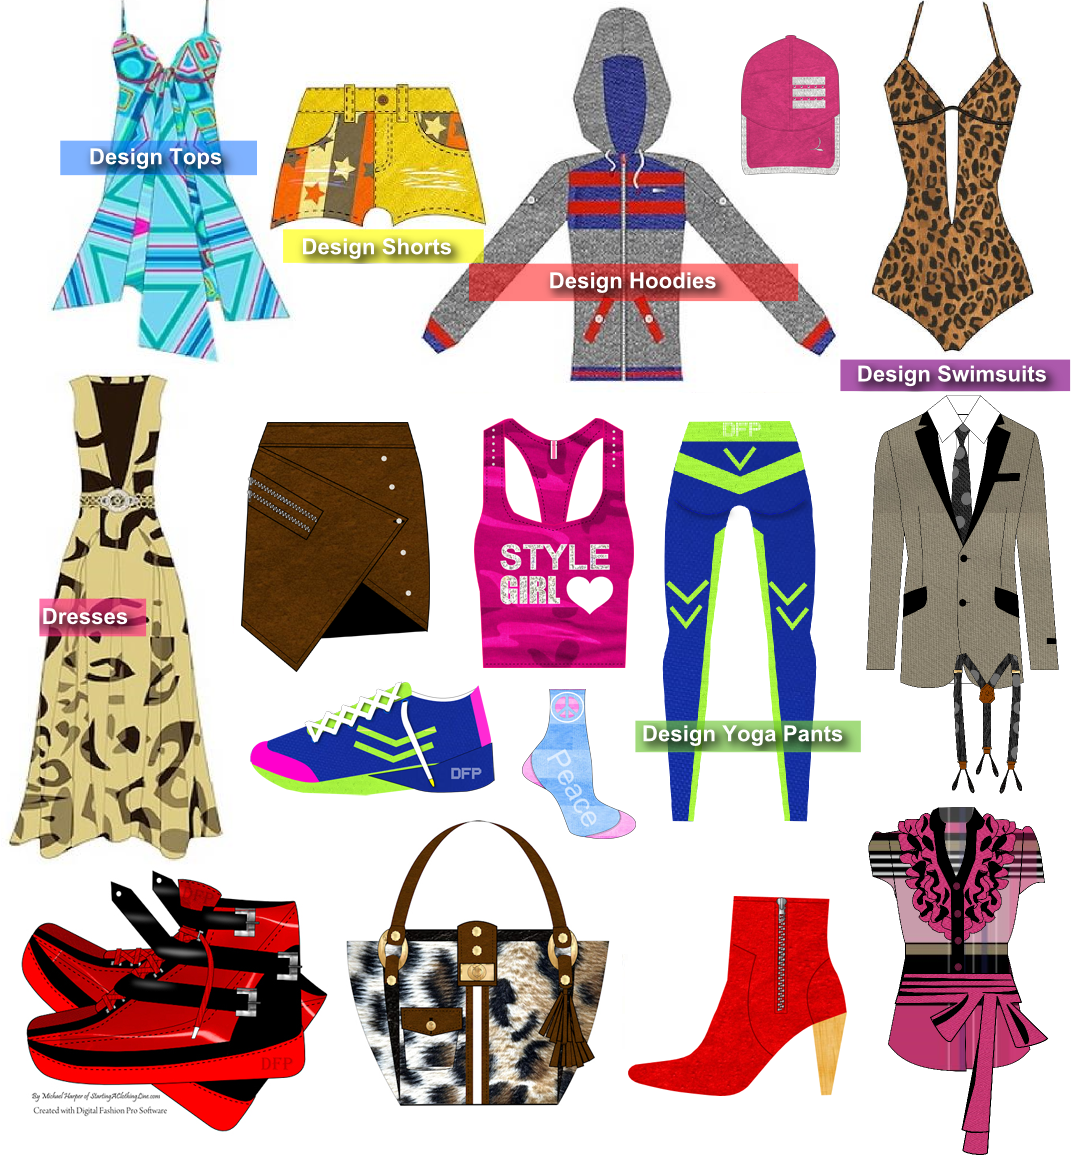 Digital Fashion Pro - Clothing Design Software | Design ...